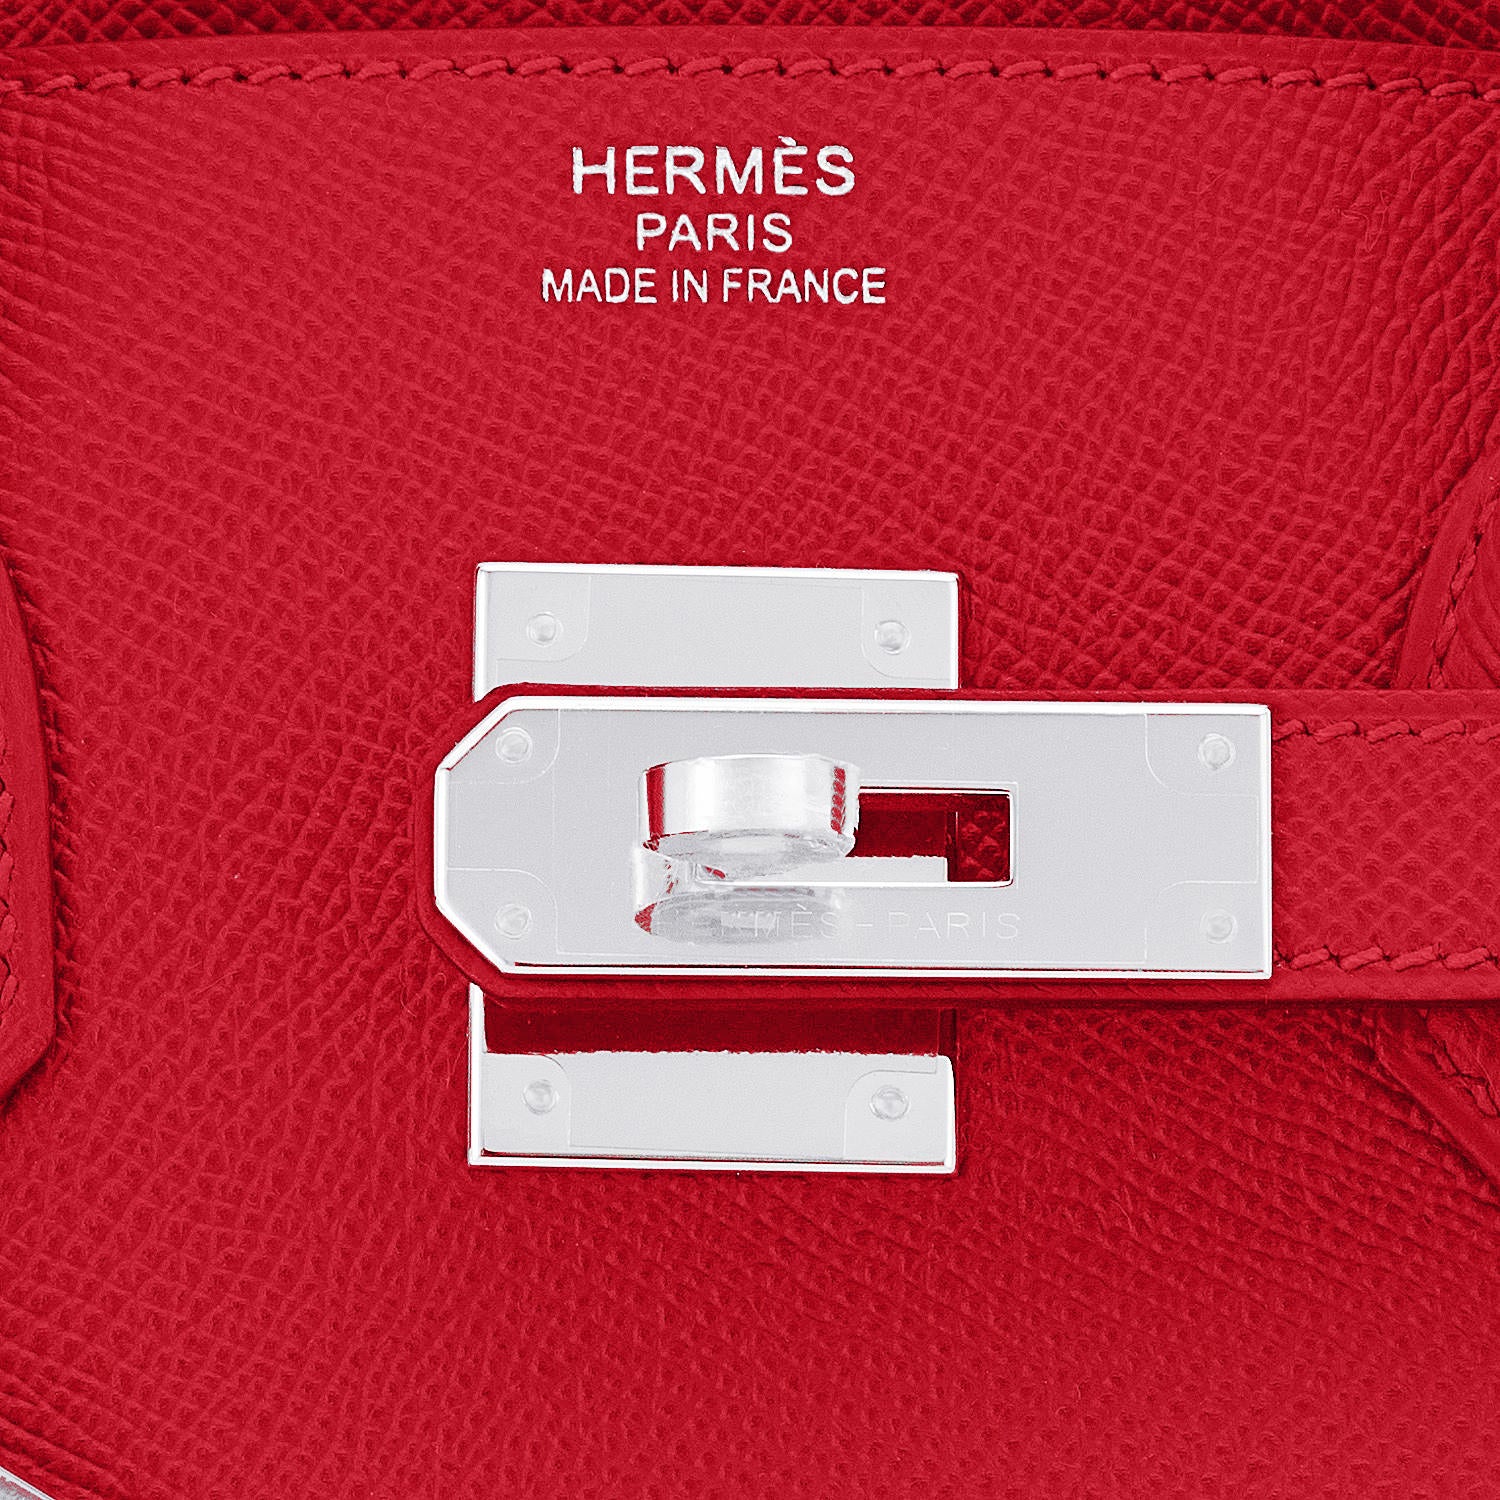 Hermes Birkin red bag  Hermes birkin red, Fashion, Hermes birkin